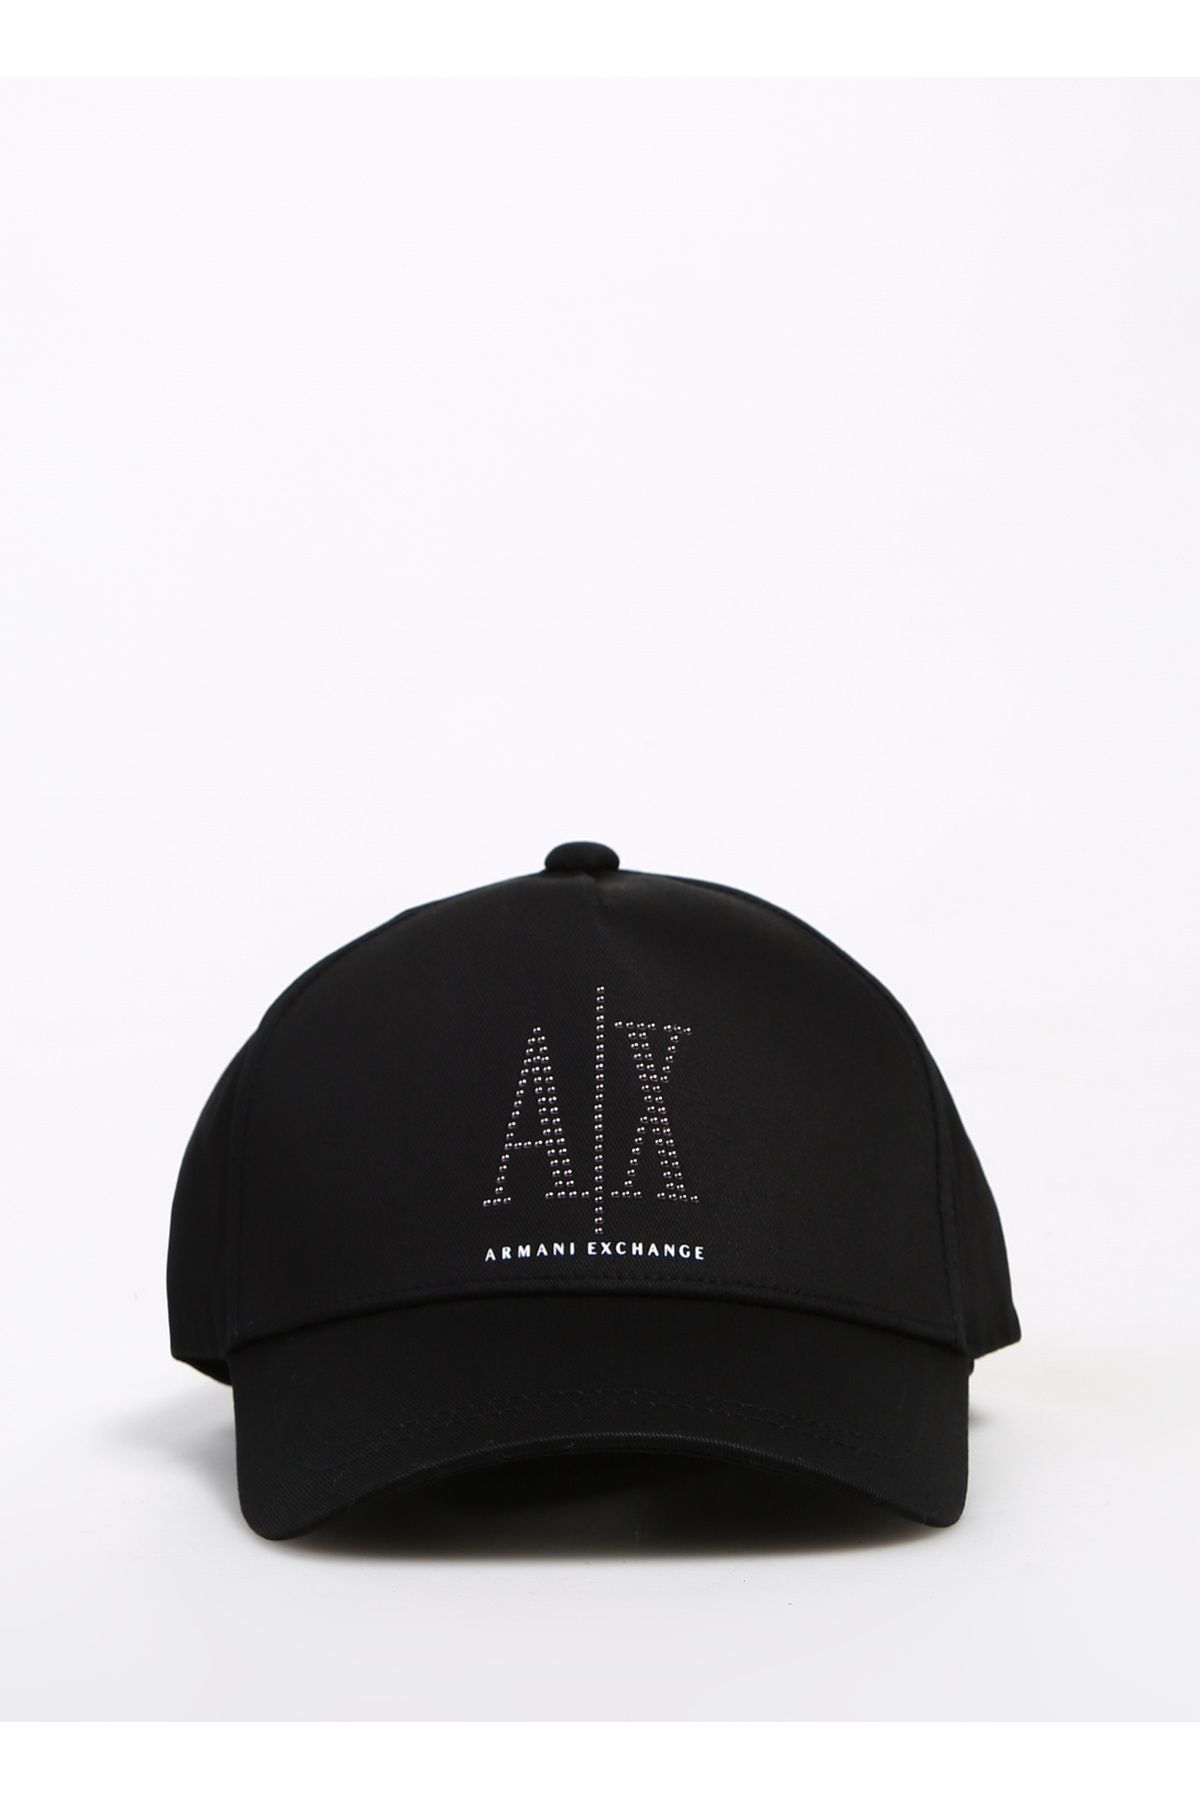 Armani Exchange کلاه زن سیاه 944208